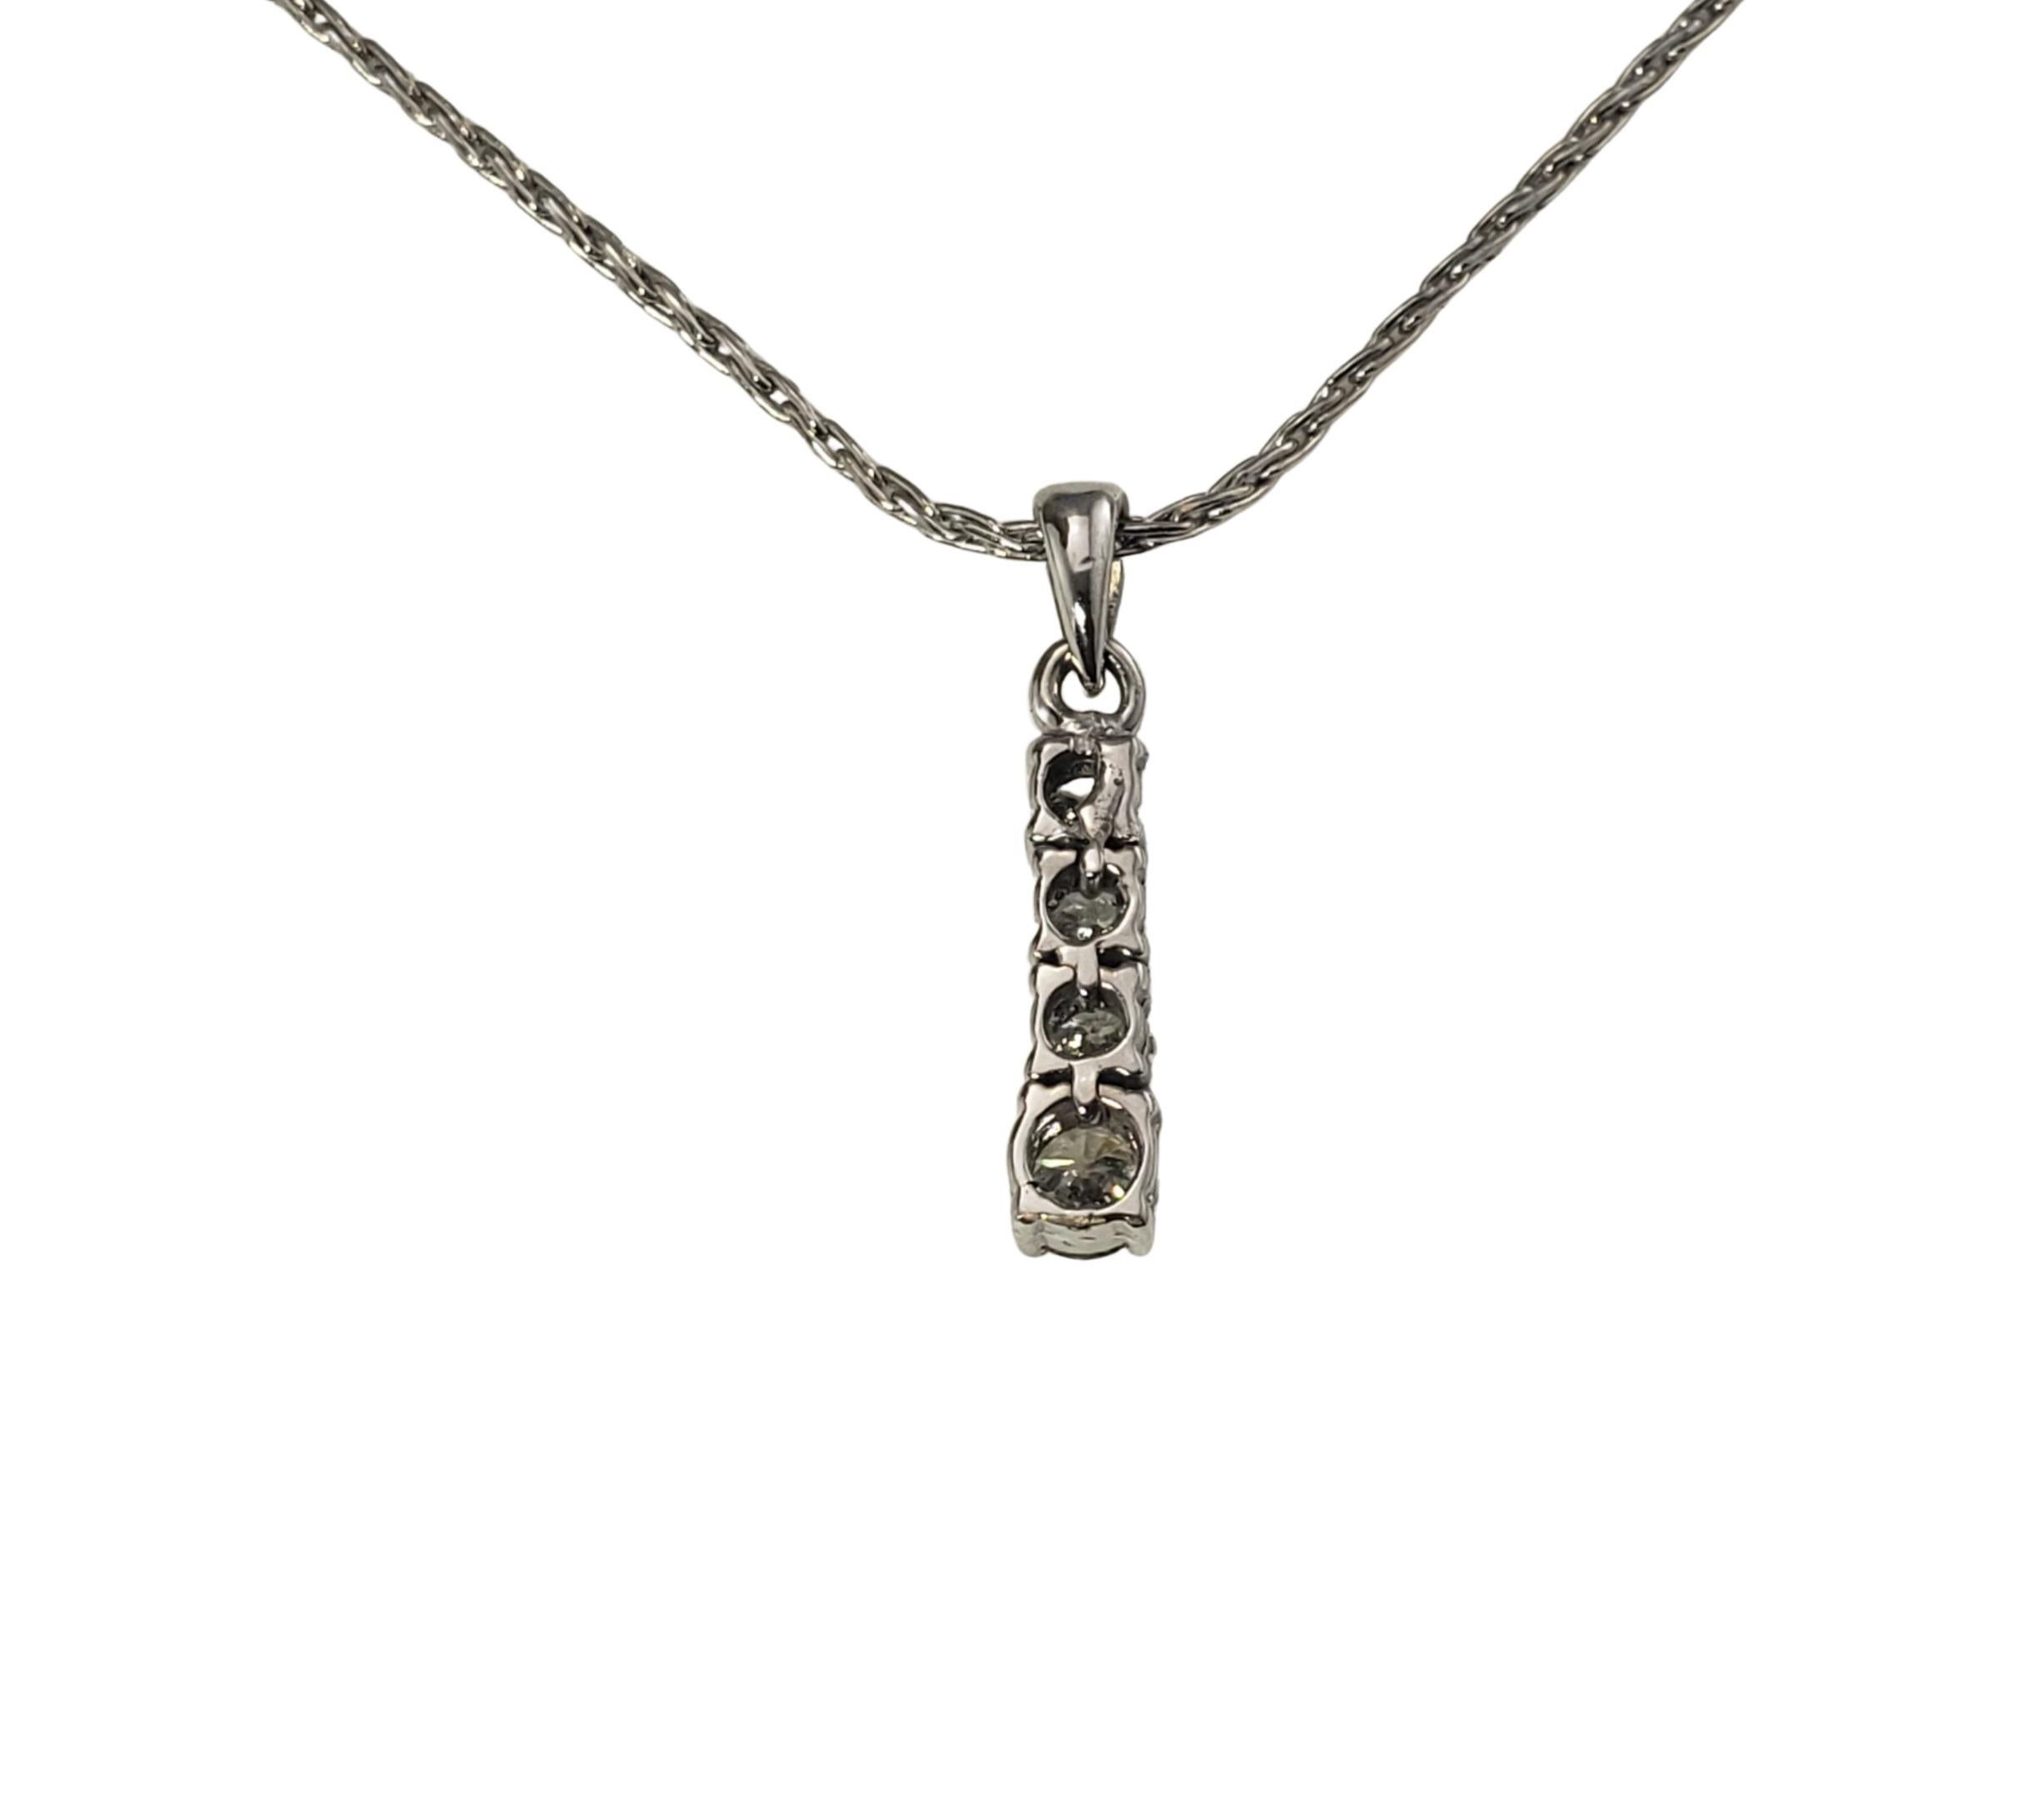 18 Karat White Gold Diamond Pendant Necklace For Sale 1